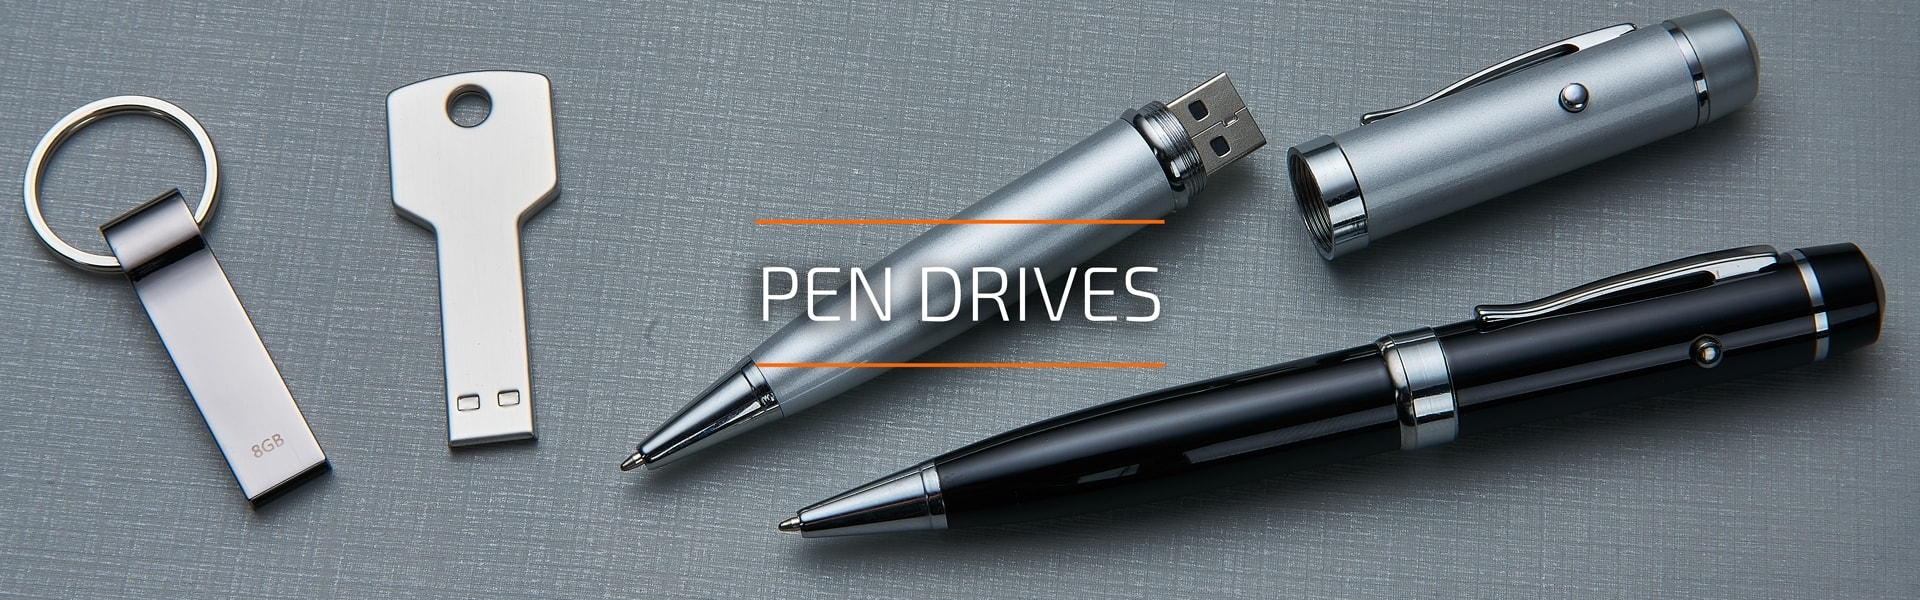 Pen Drives